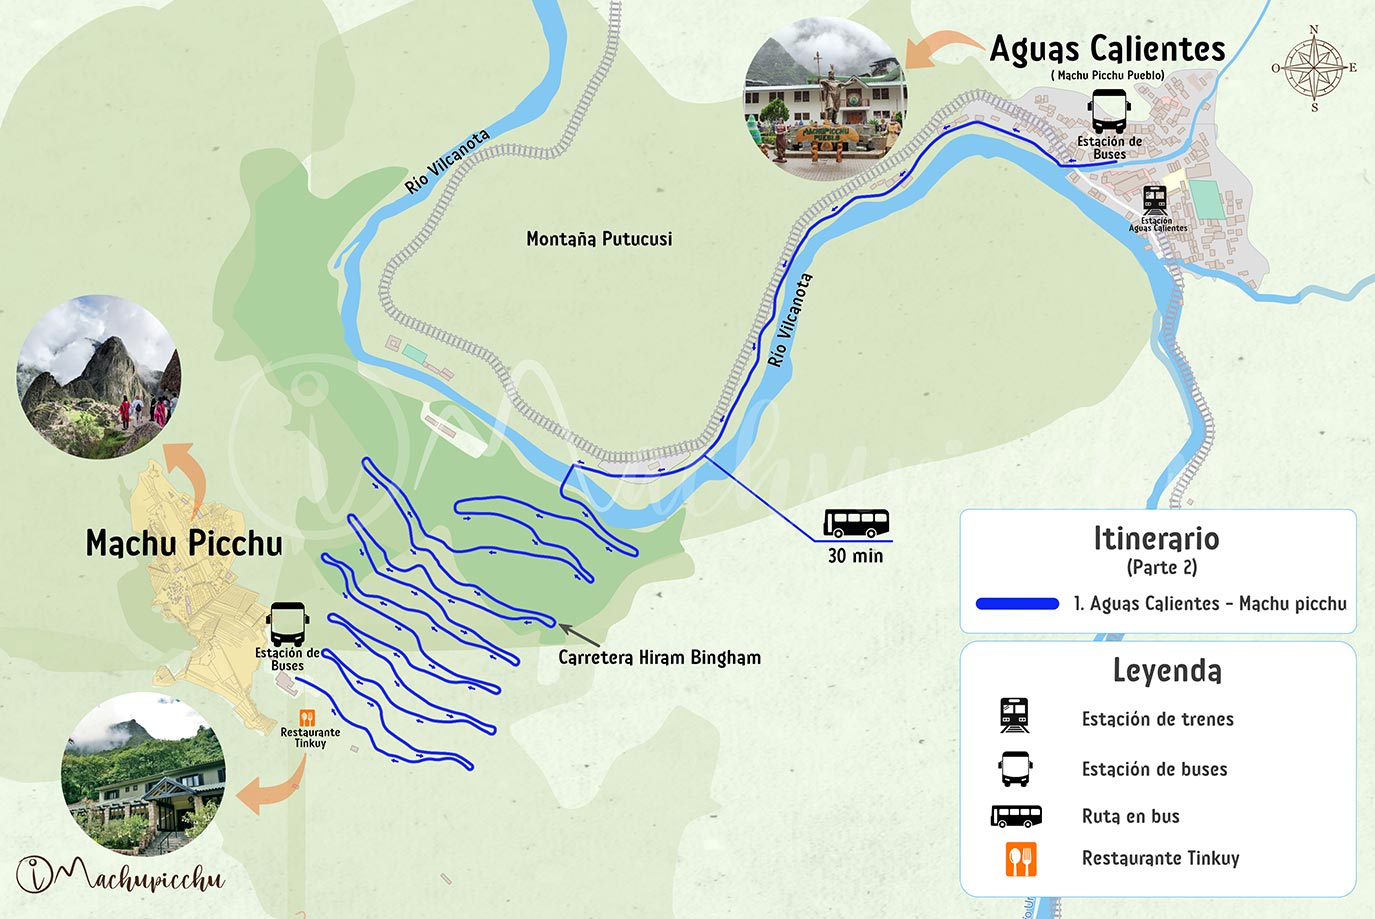 Route Aguas Calientes - Machu Picchu